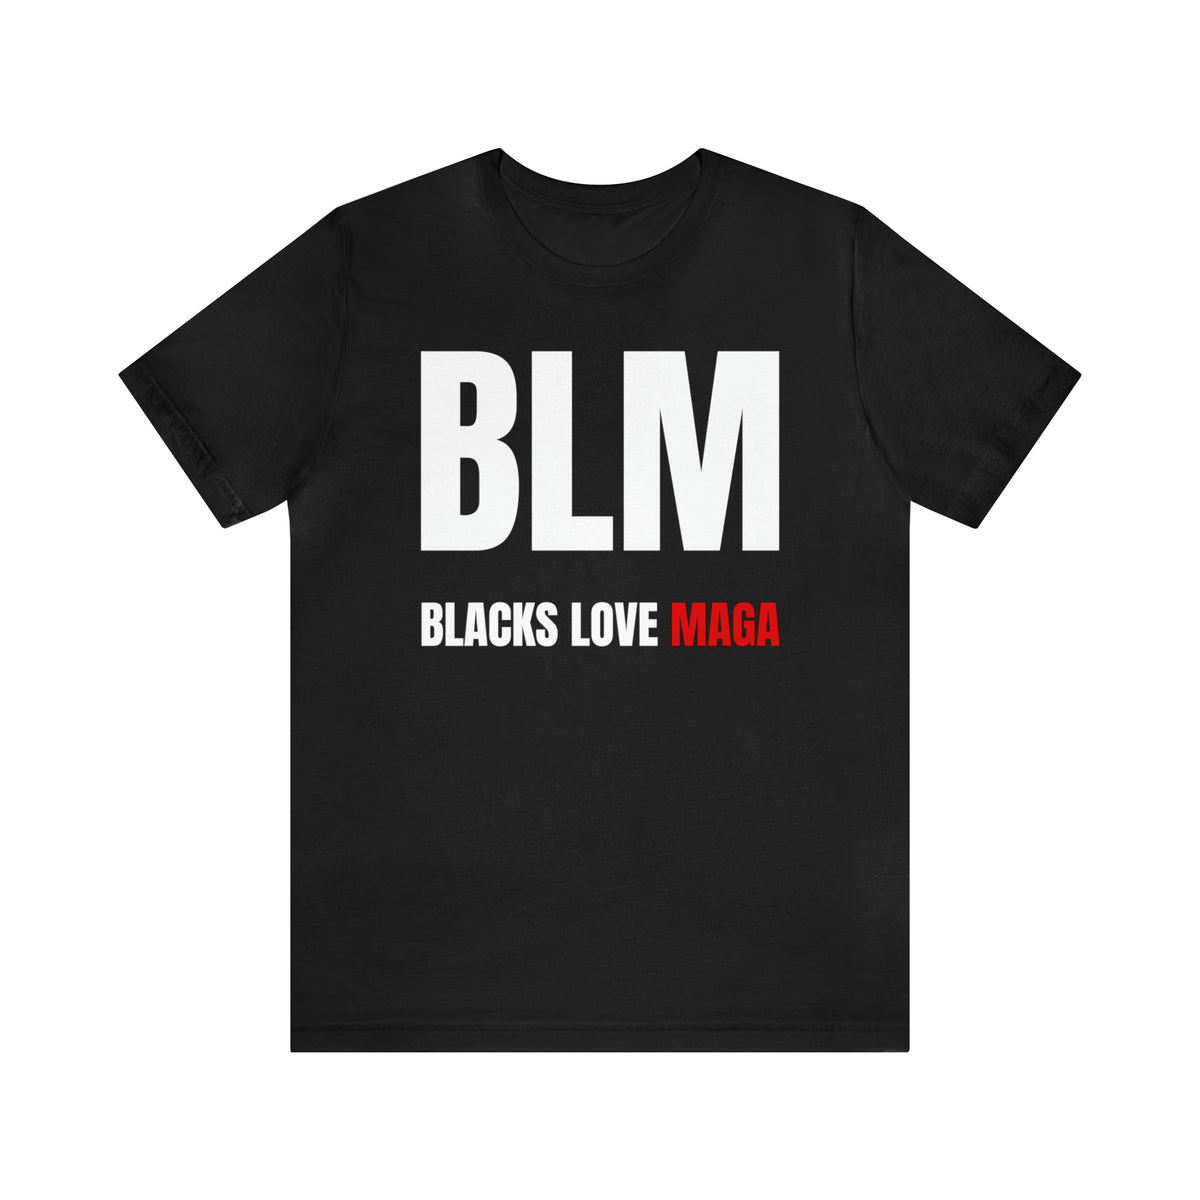 BLM - Blacks Love MAGA T-Shirt